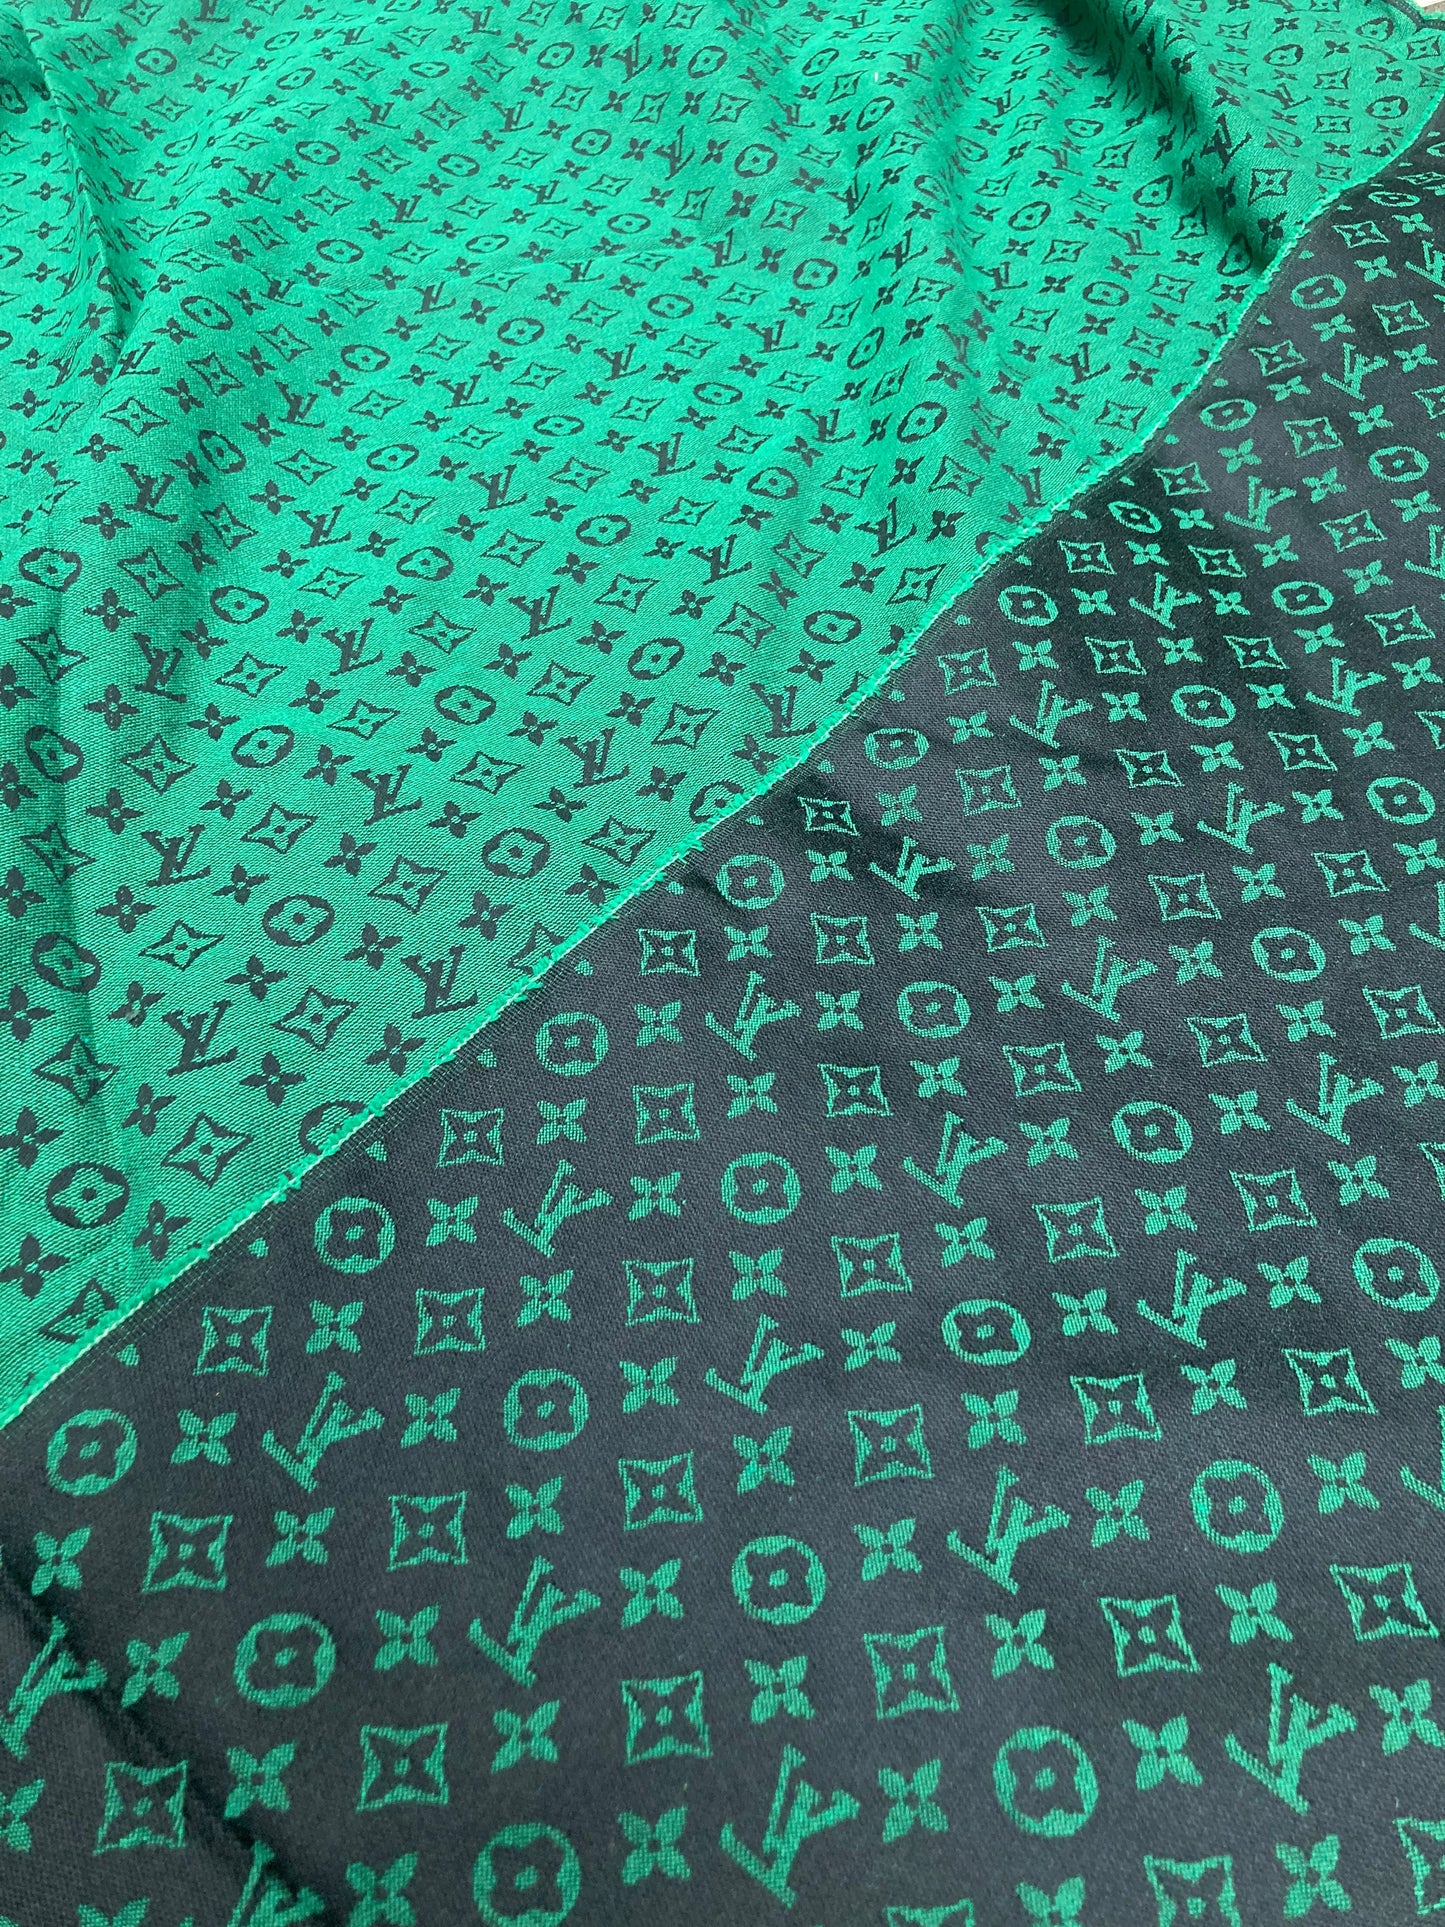 Handmade Green LV Jacquard Fabric for Crafts DIY